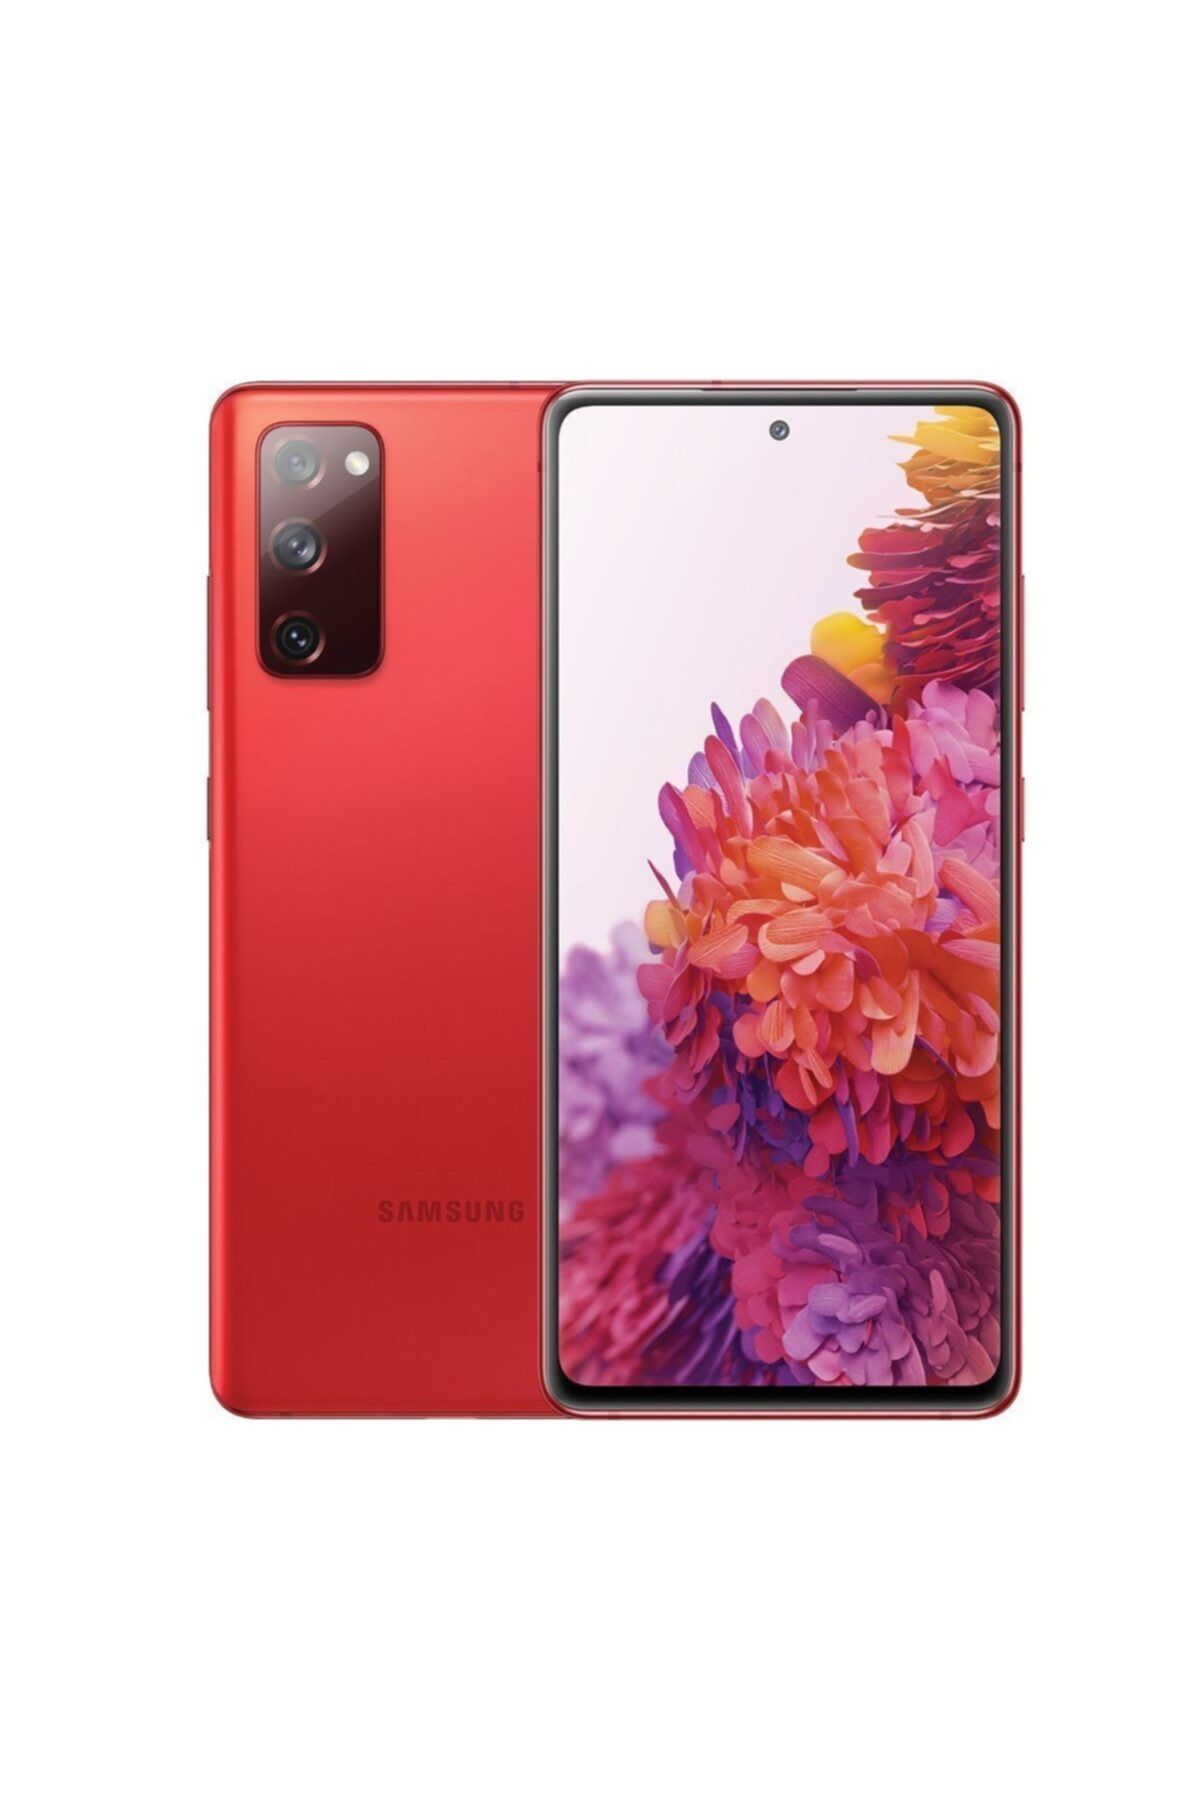 Samsung Galaxy S20 FE (Çift SIM) 256GB Cloud Red Cep Telefonu (Samsung Türkiye Garantili)